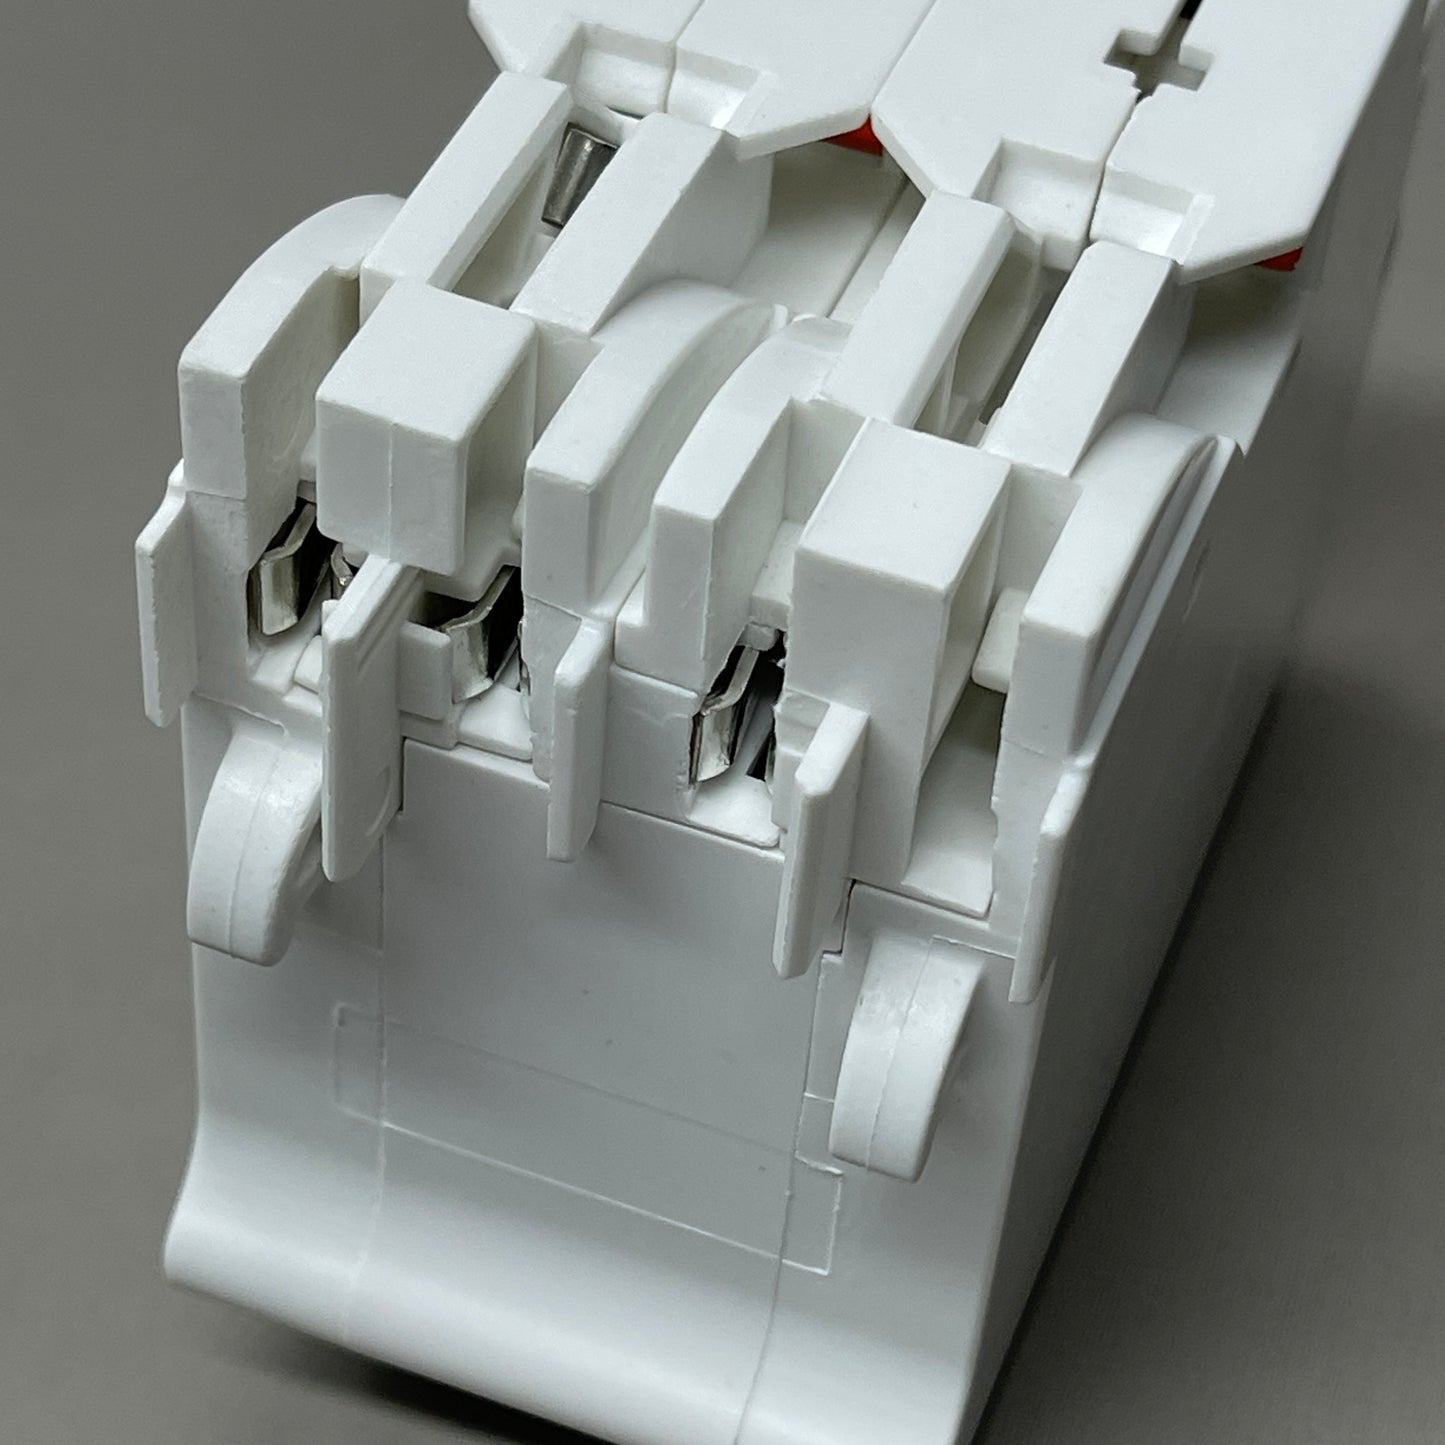 LEVITON 5-PACK! 30A 2-Pole Plug-In Circuit Breaker 120/240V White 200-LB230-T (New)